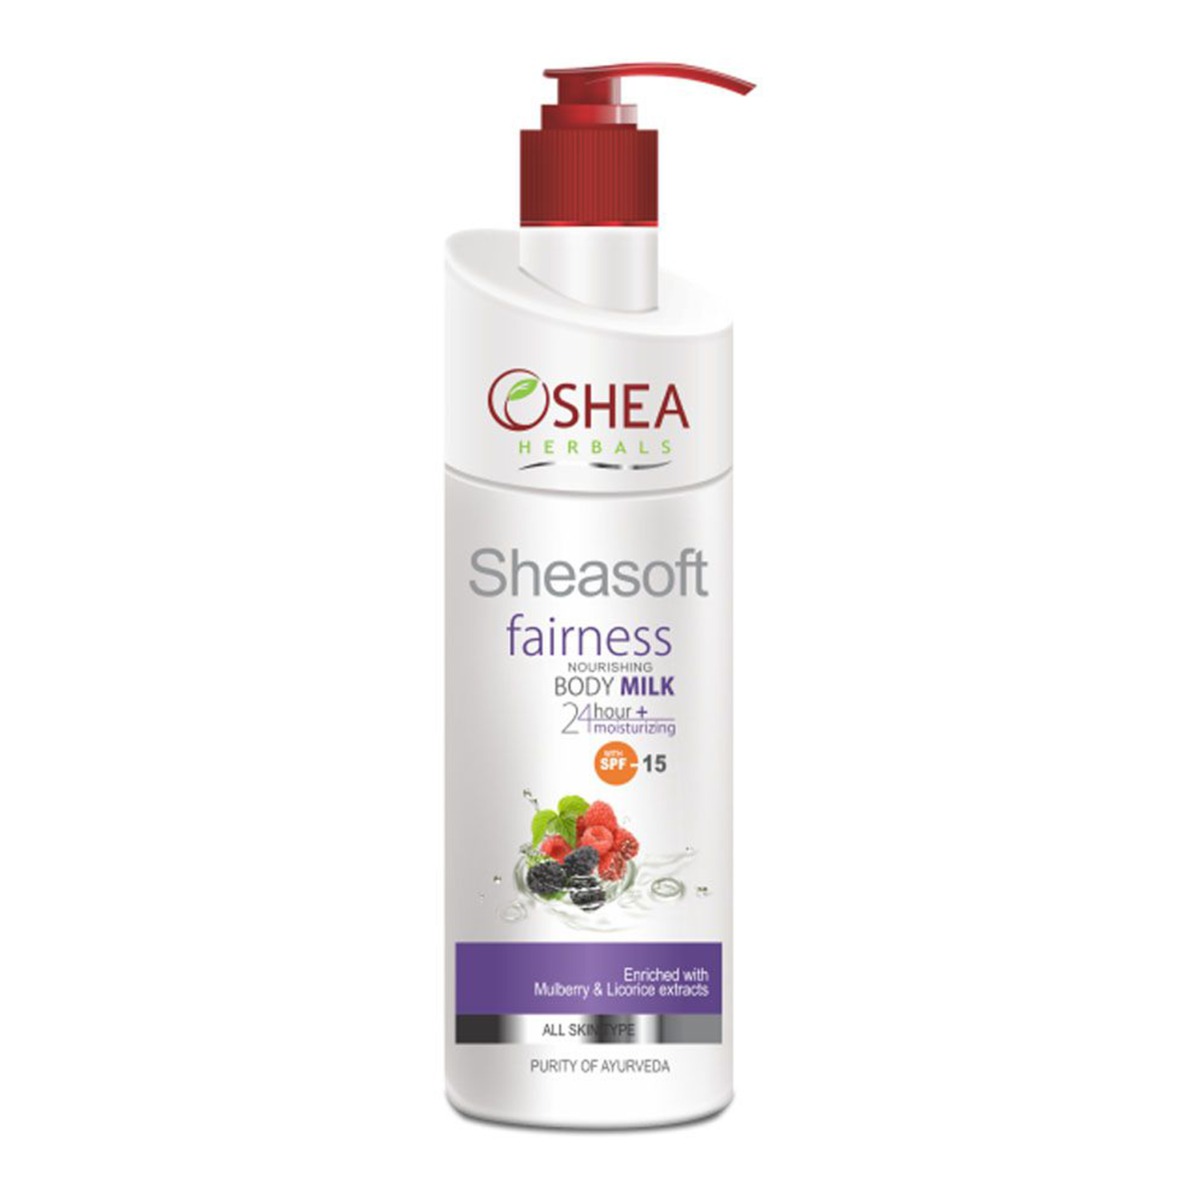 Oshea Herbals Sheasoft Fairness Nourishing Body Milk, 250ml